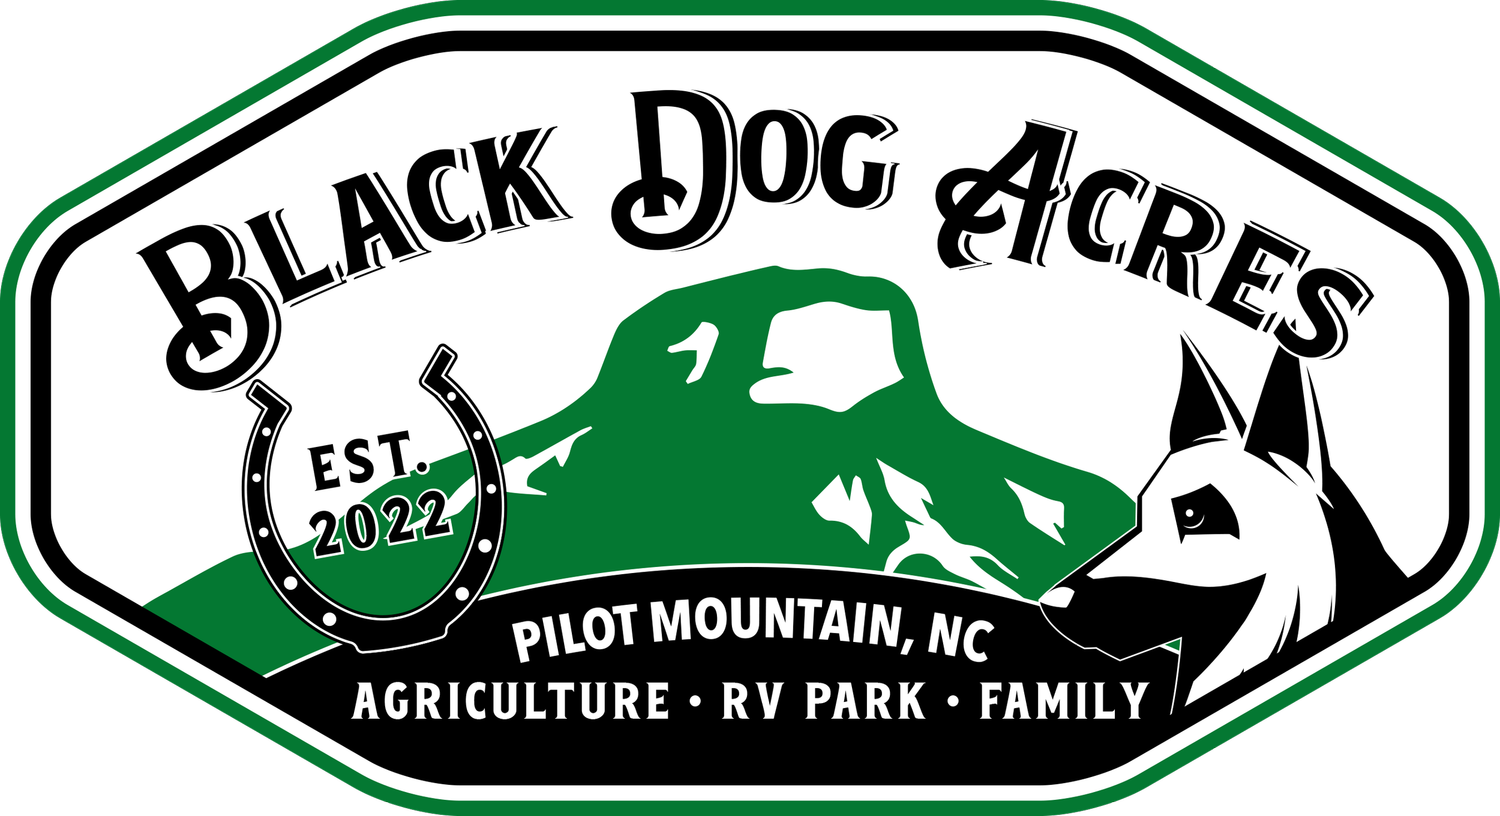 Black Dog Acres, LLC